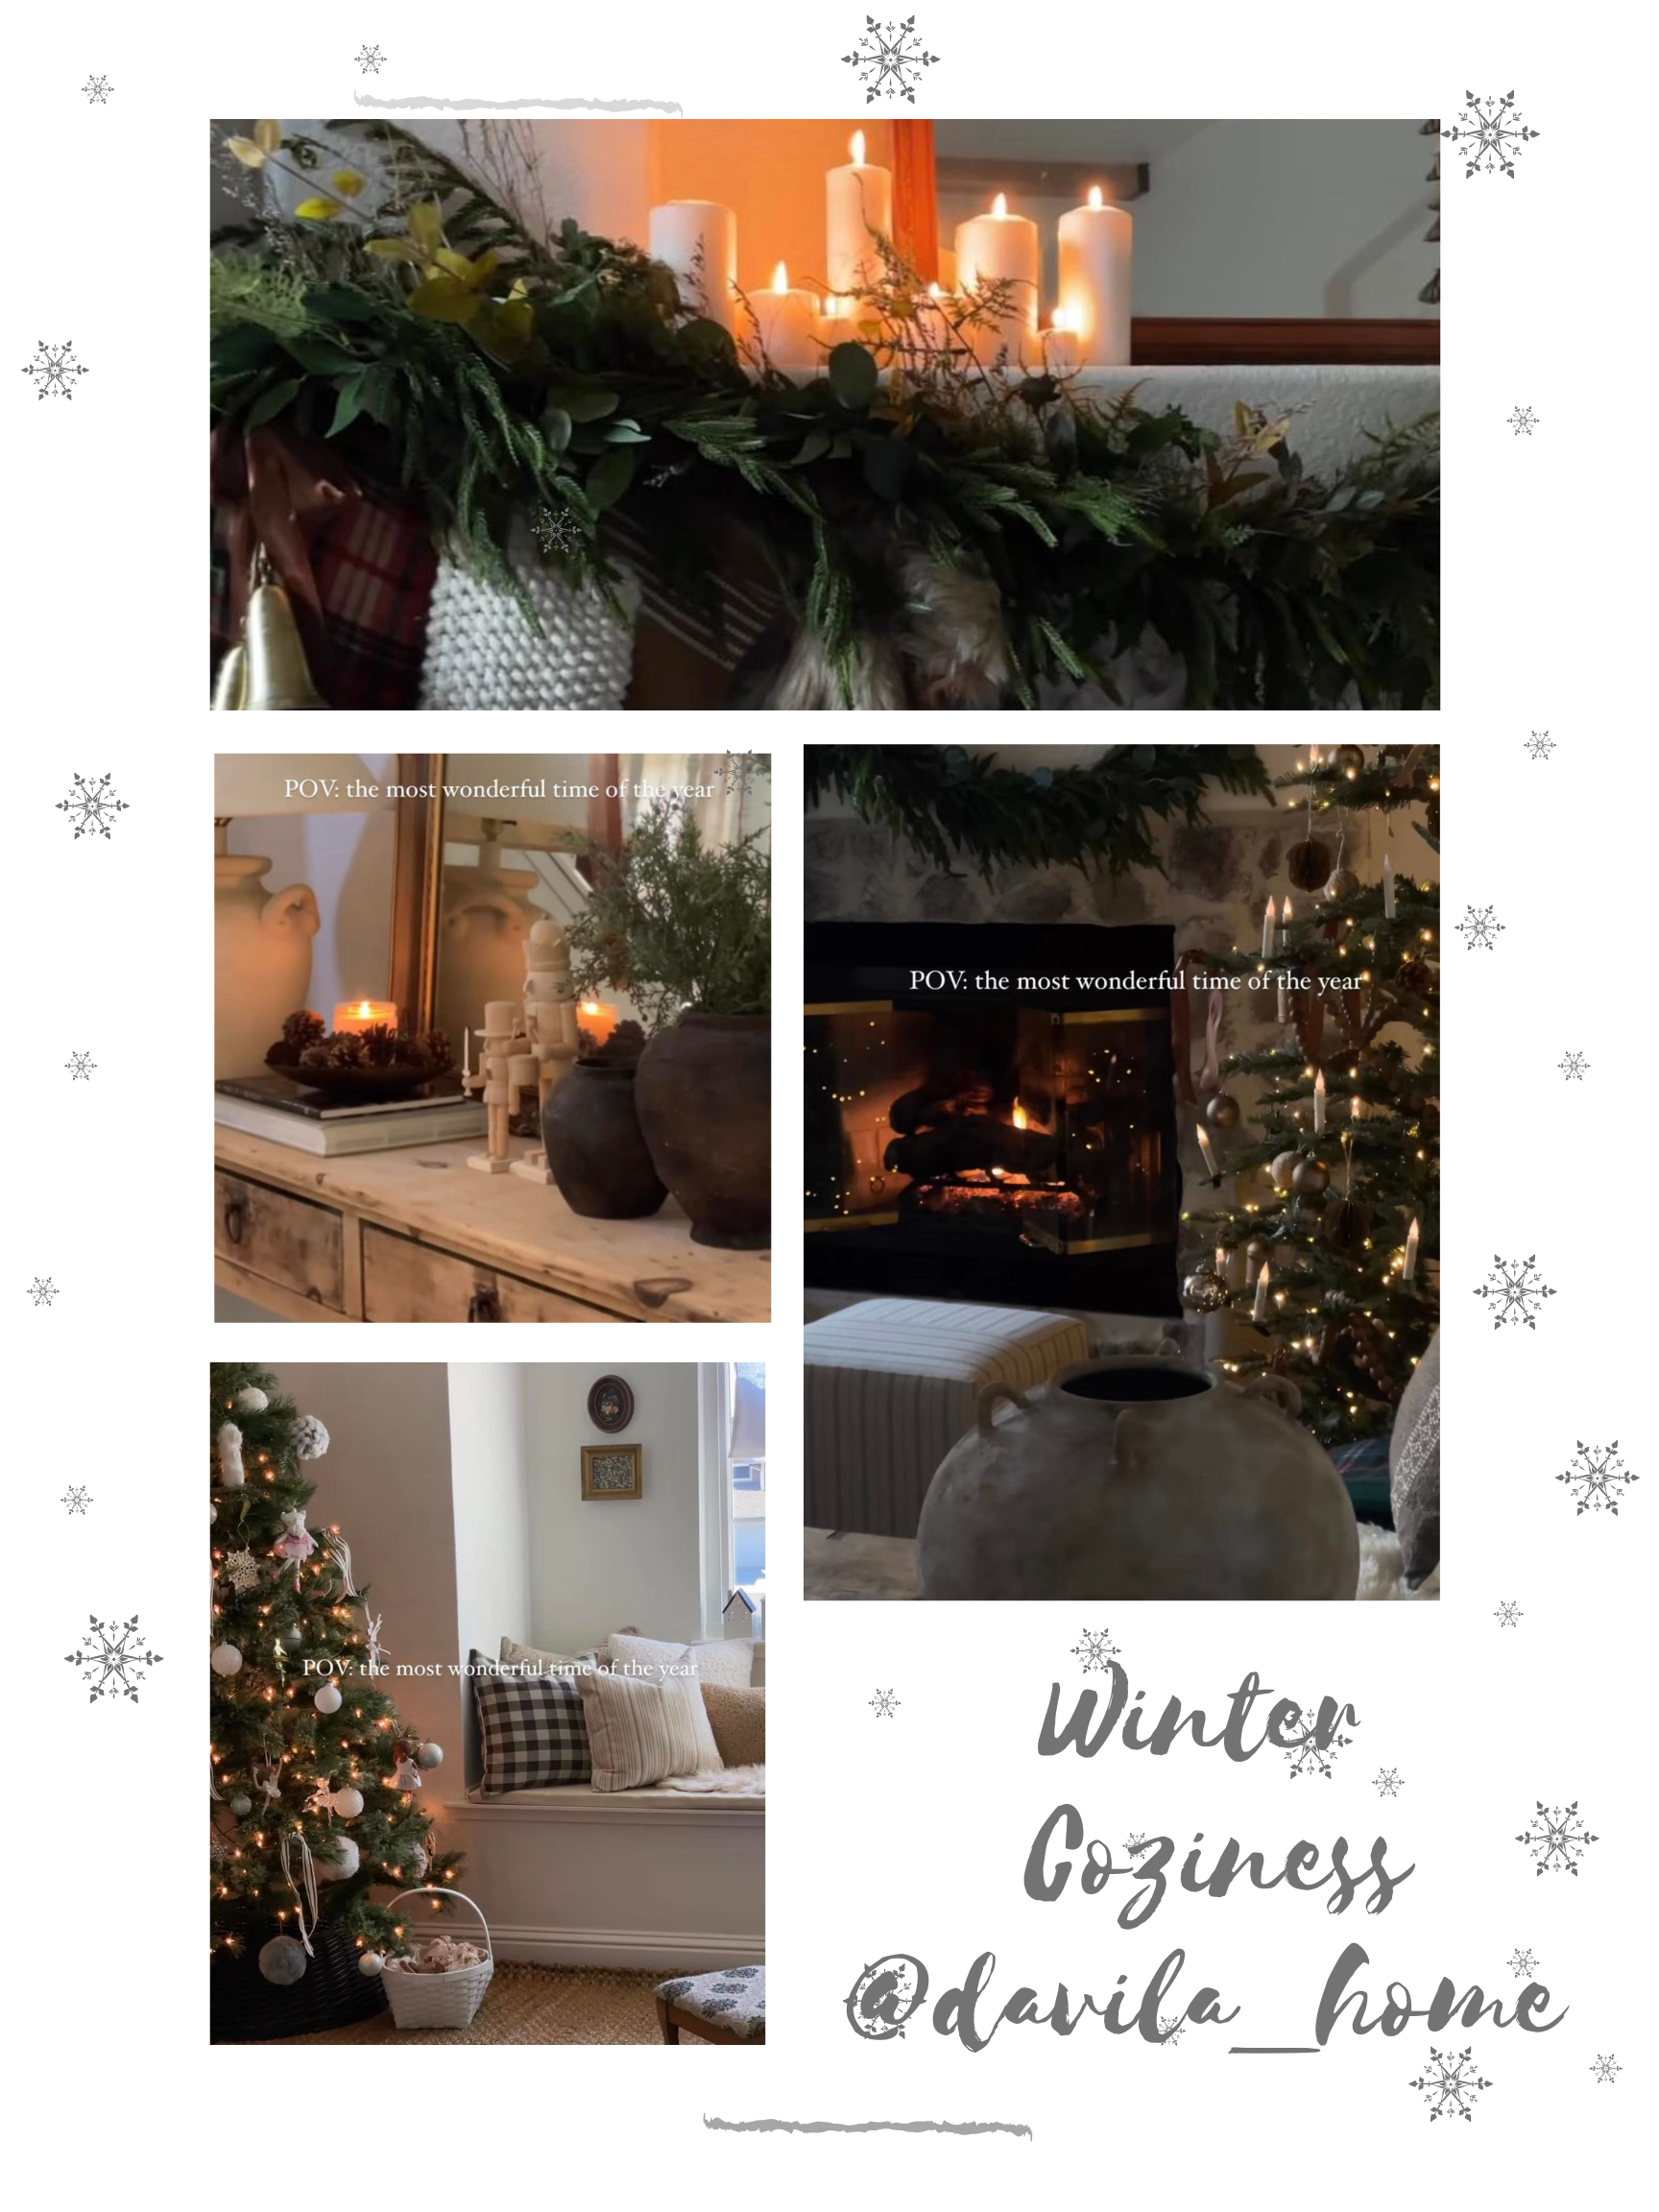 Christmas interior design and decoration